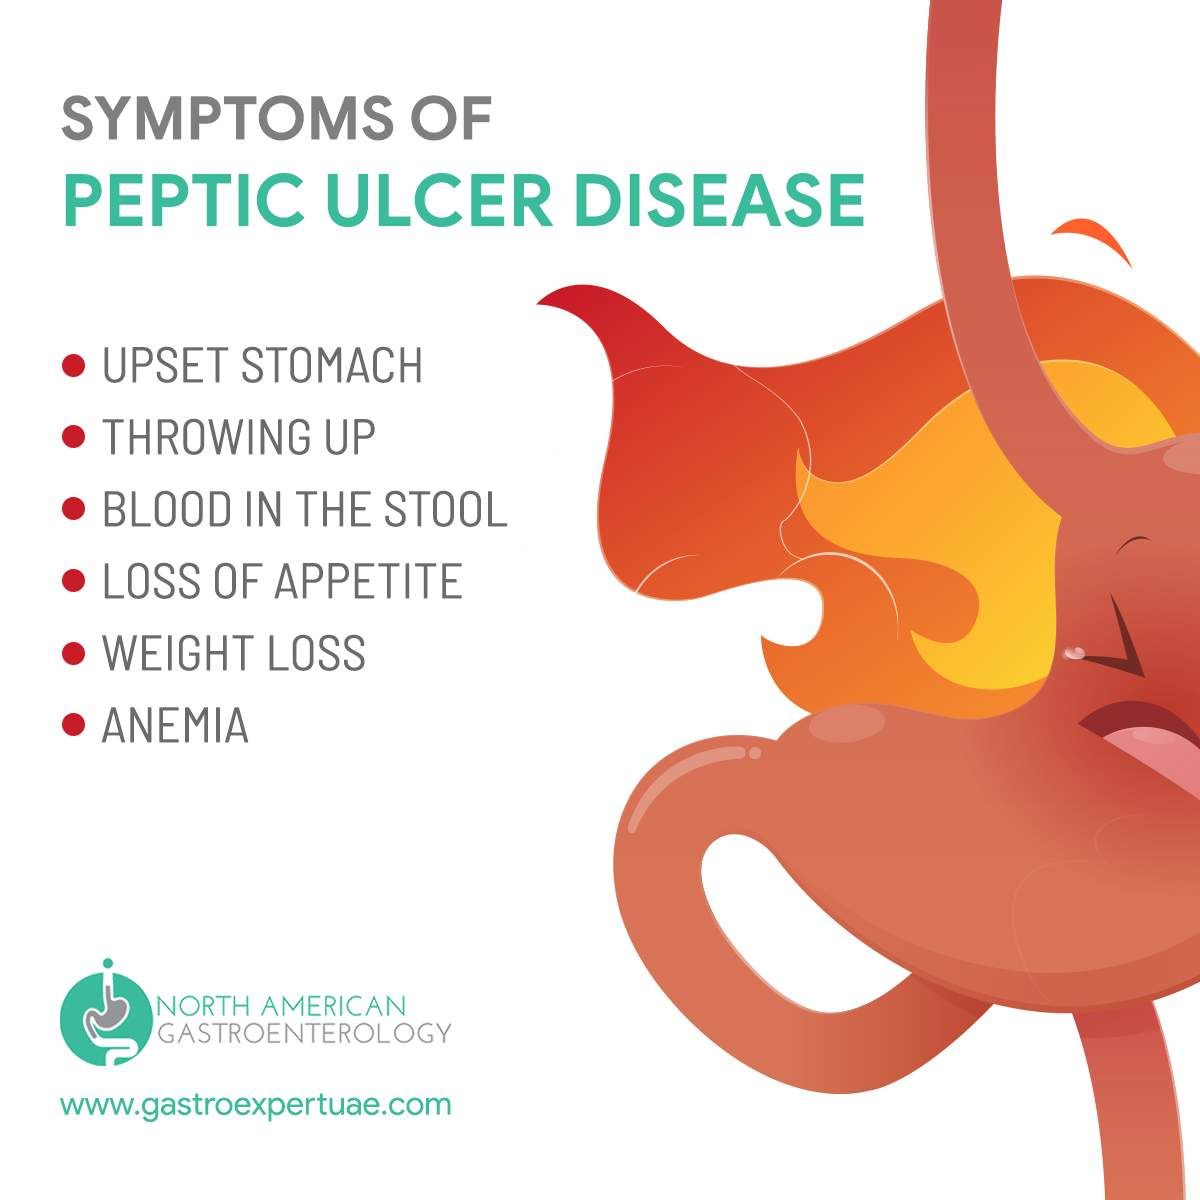 SYMPTOMS OF PEPTIC ULCER DISEASE